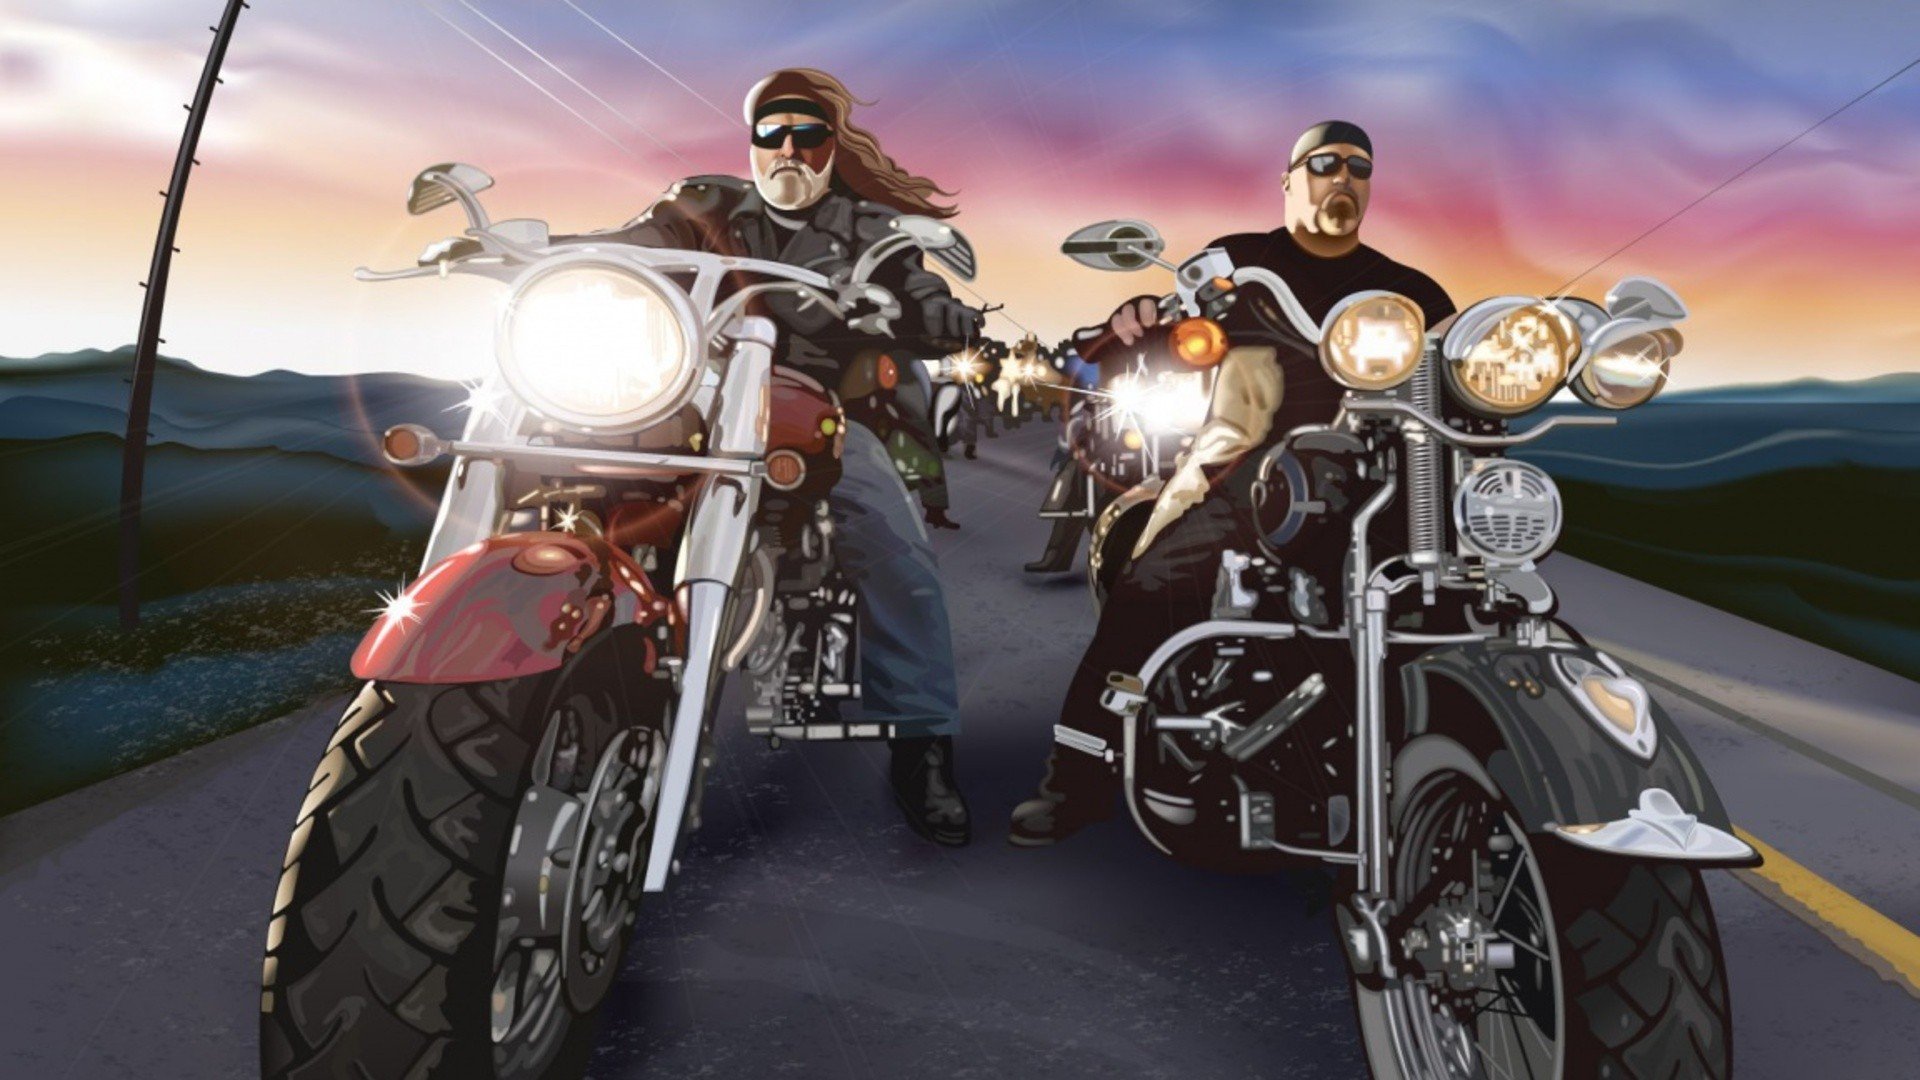 cartoons, Bikes, Chopper, Beard, Motorbikes, Bikers, Harley davidson  Wallpapers HD / Desktop and Mobile Backgrounds